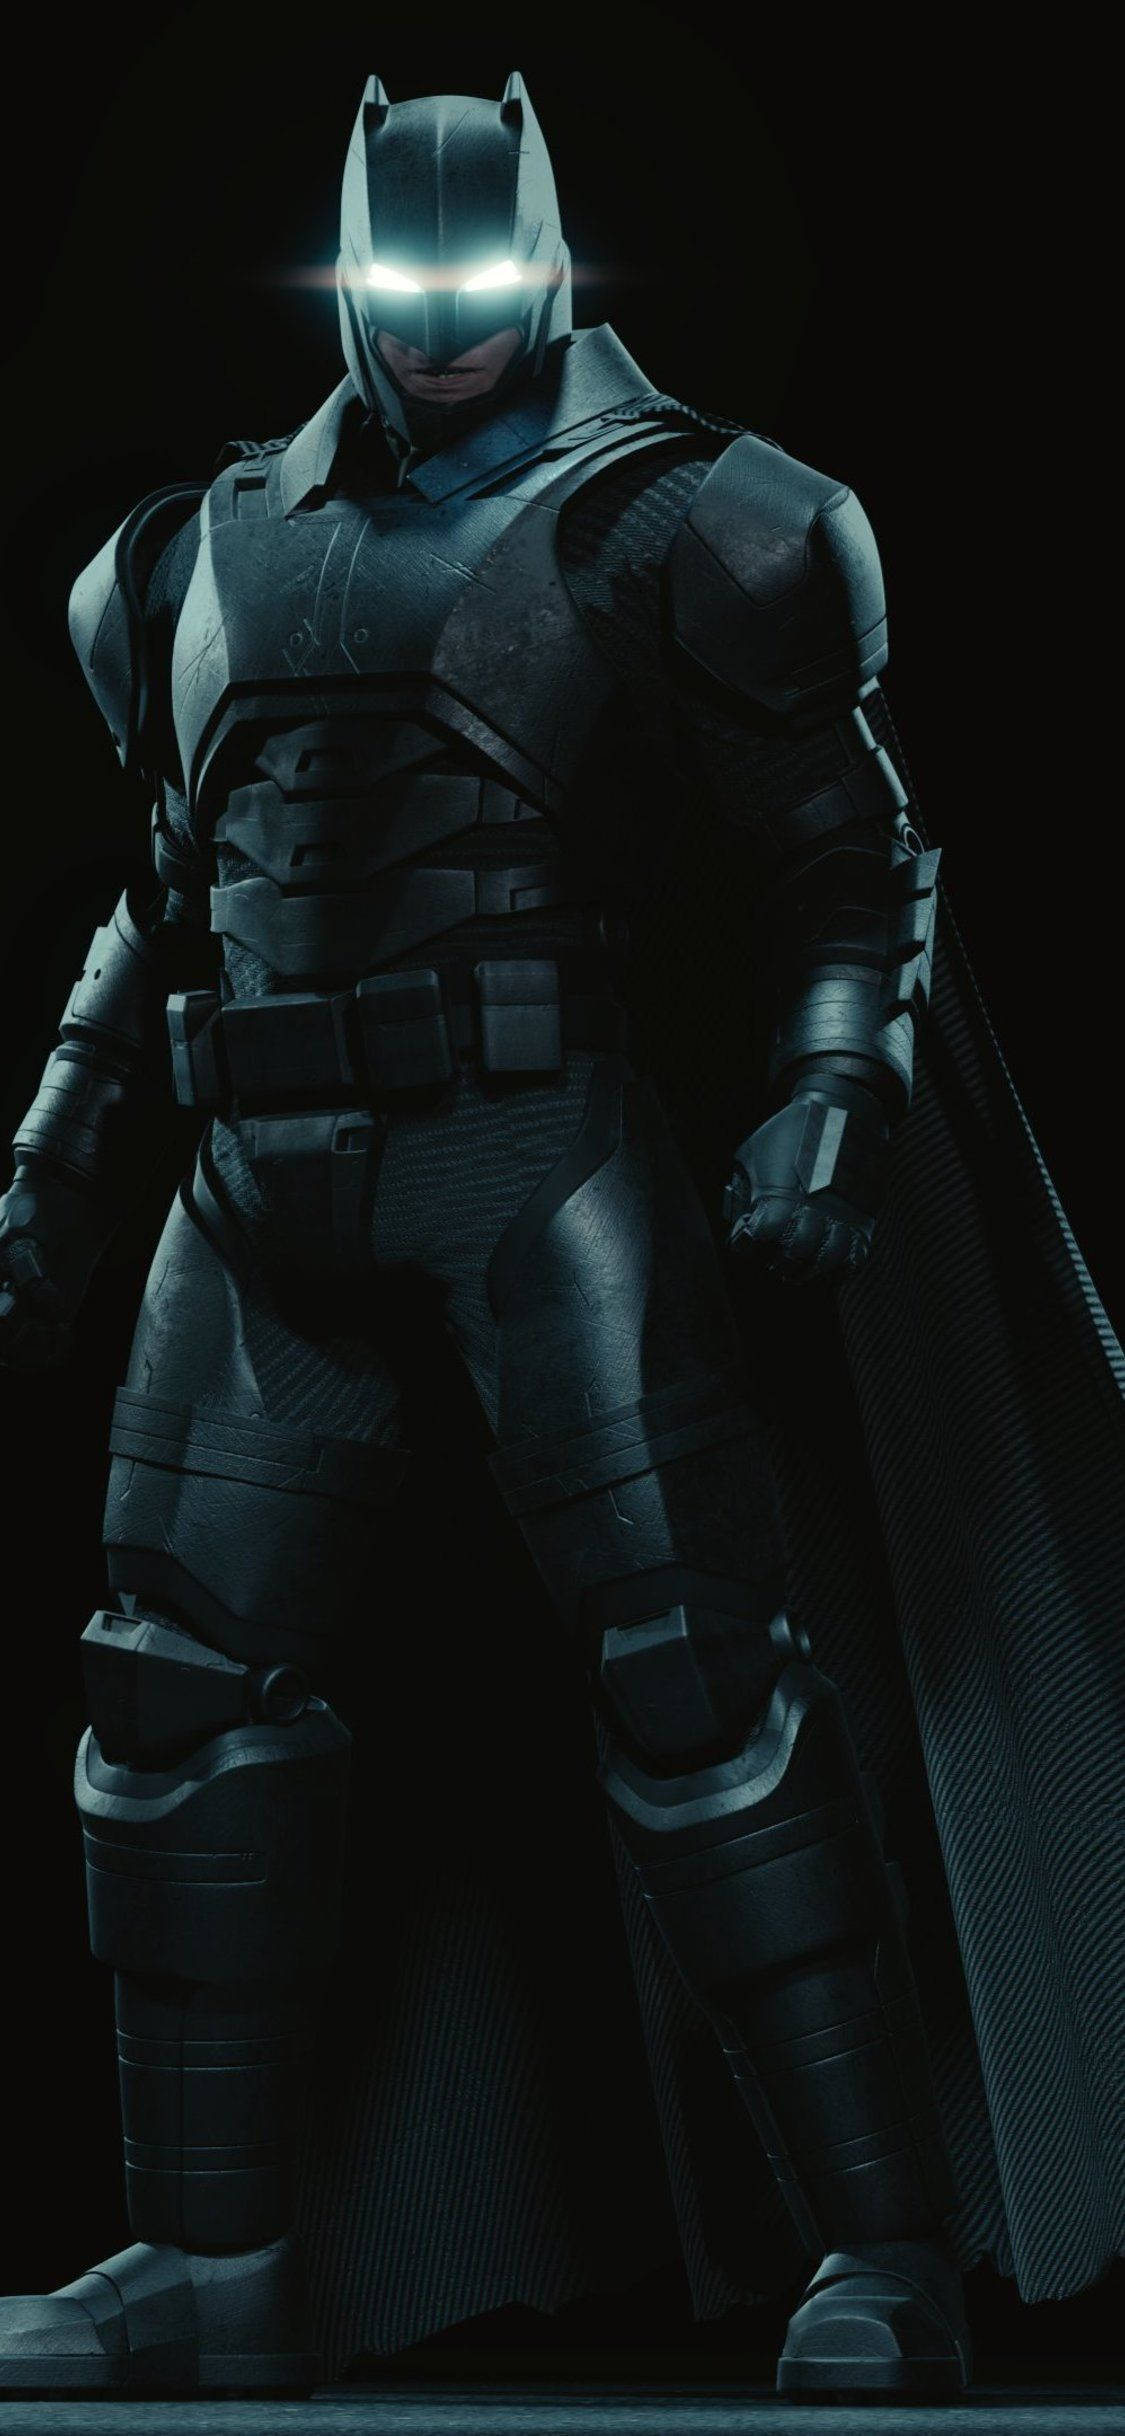 Batmanganzkörperkunst Iphone X Wallpaper